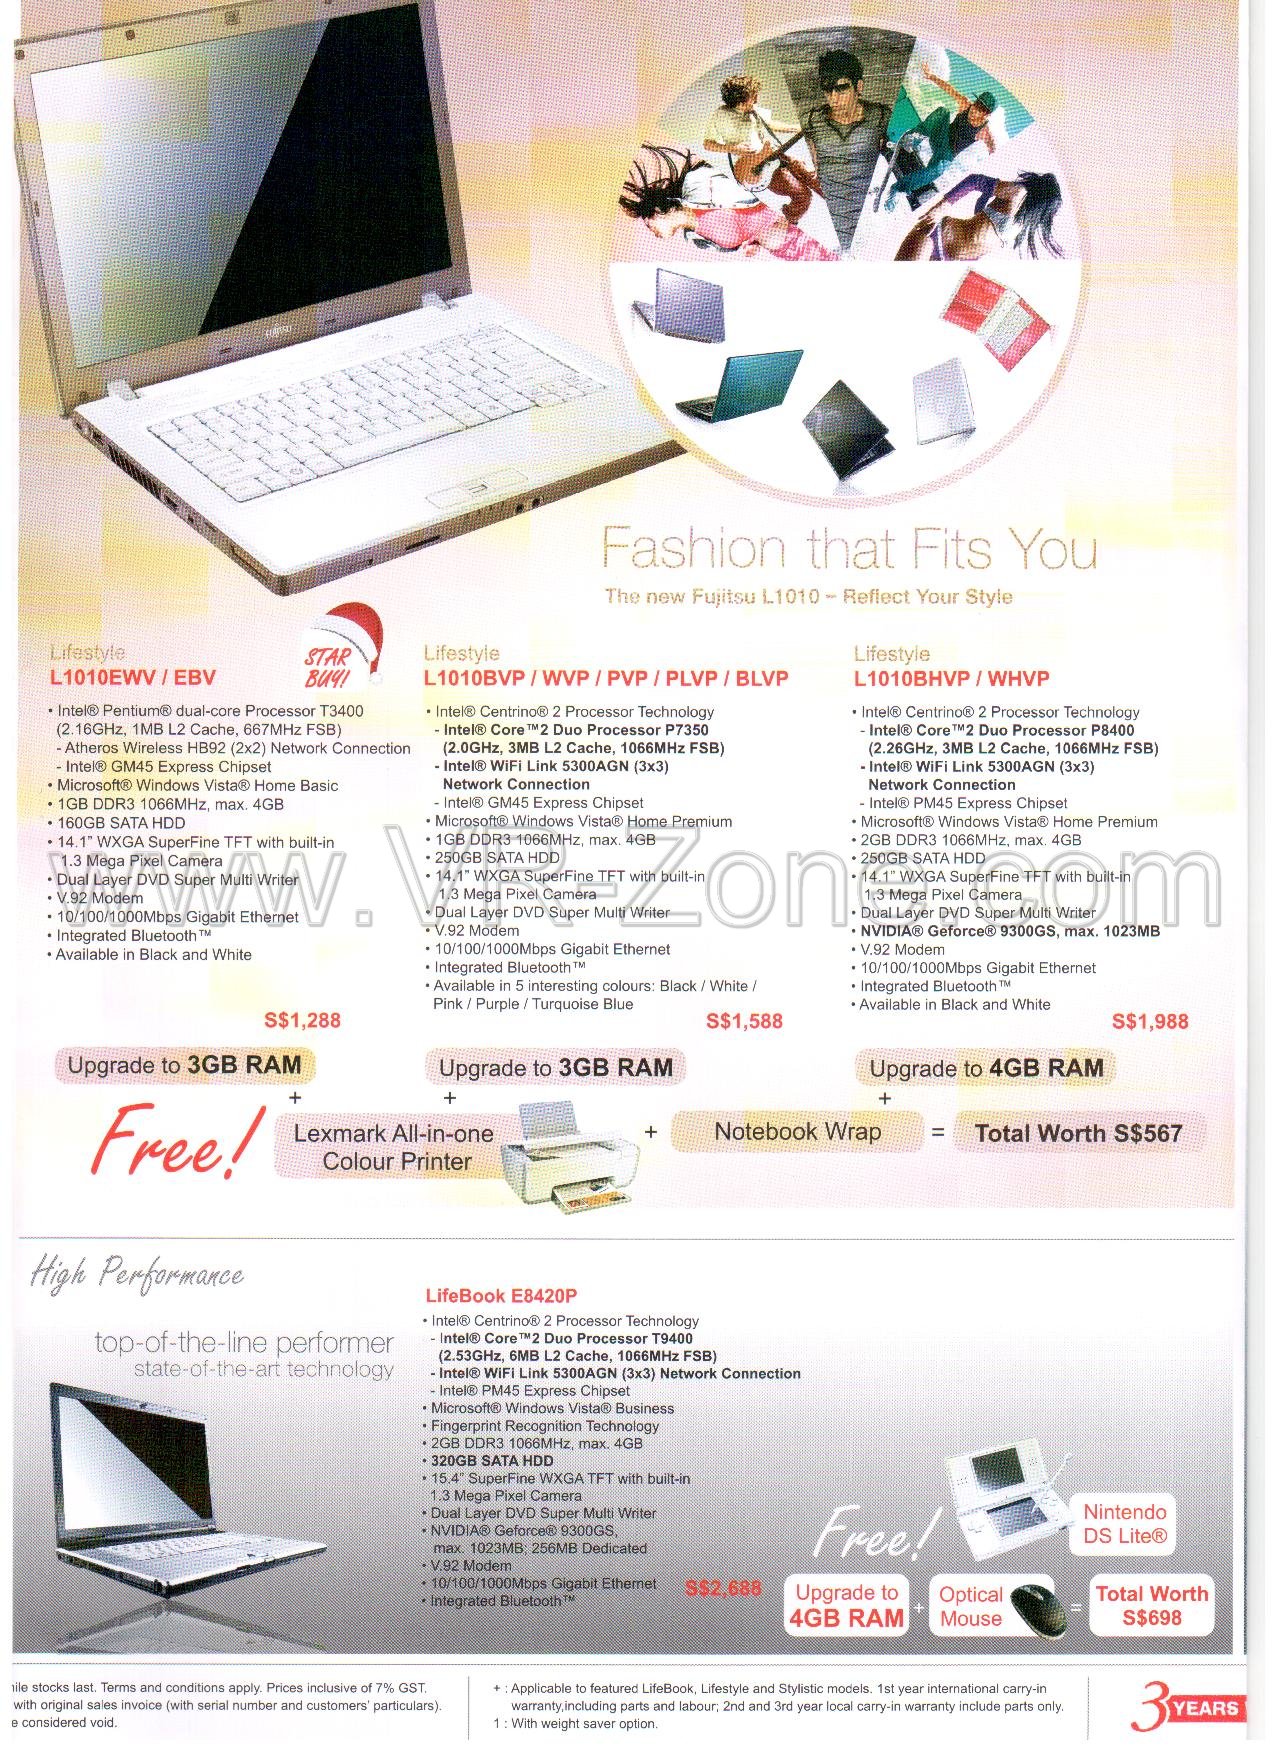 Sitex 2008 price list image brochure of Fujitsu Notebooks 5